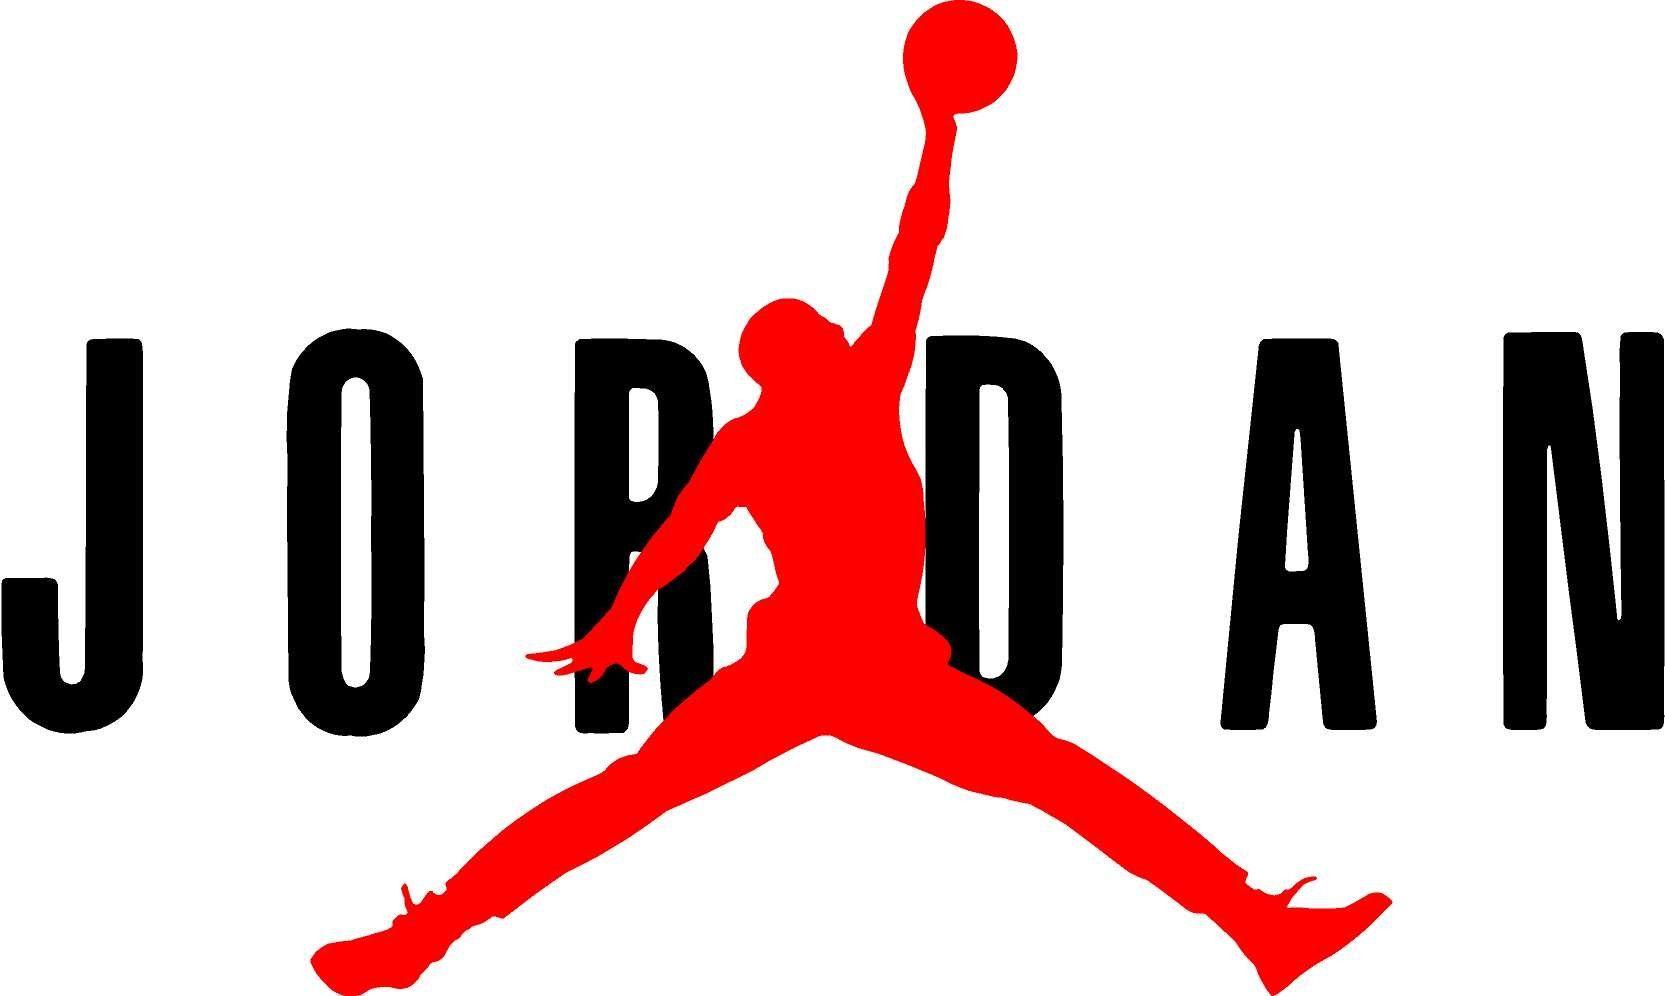 Red Basketball Player Logo - Amazon.com: AIR Jordan Flight 23 Jumpman Logo NBA Huge Vinyl Decal ...